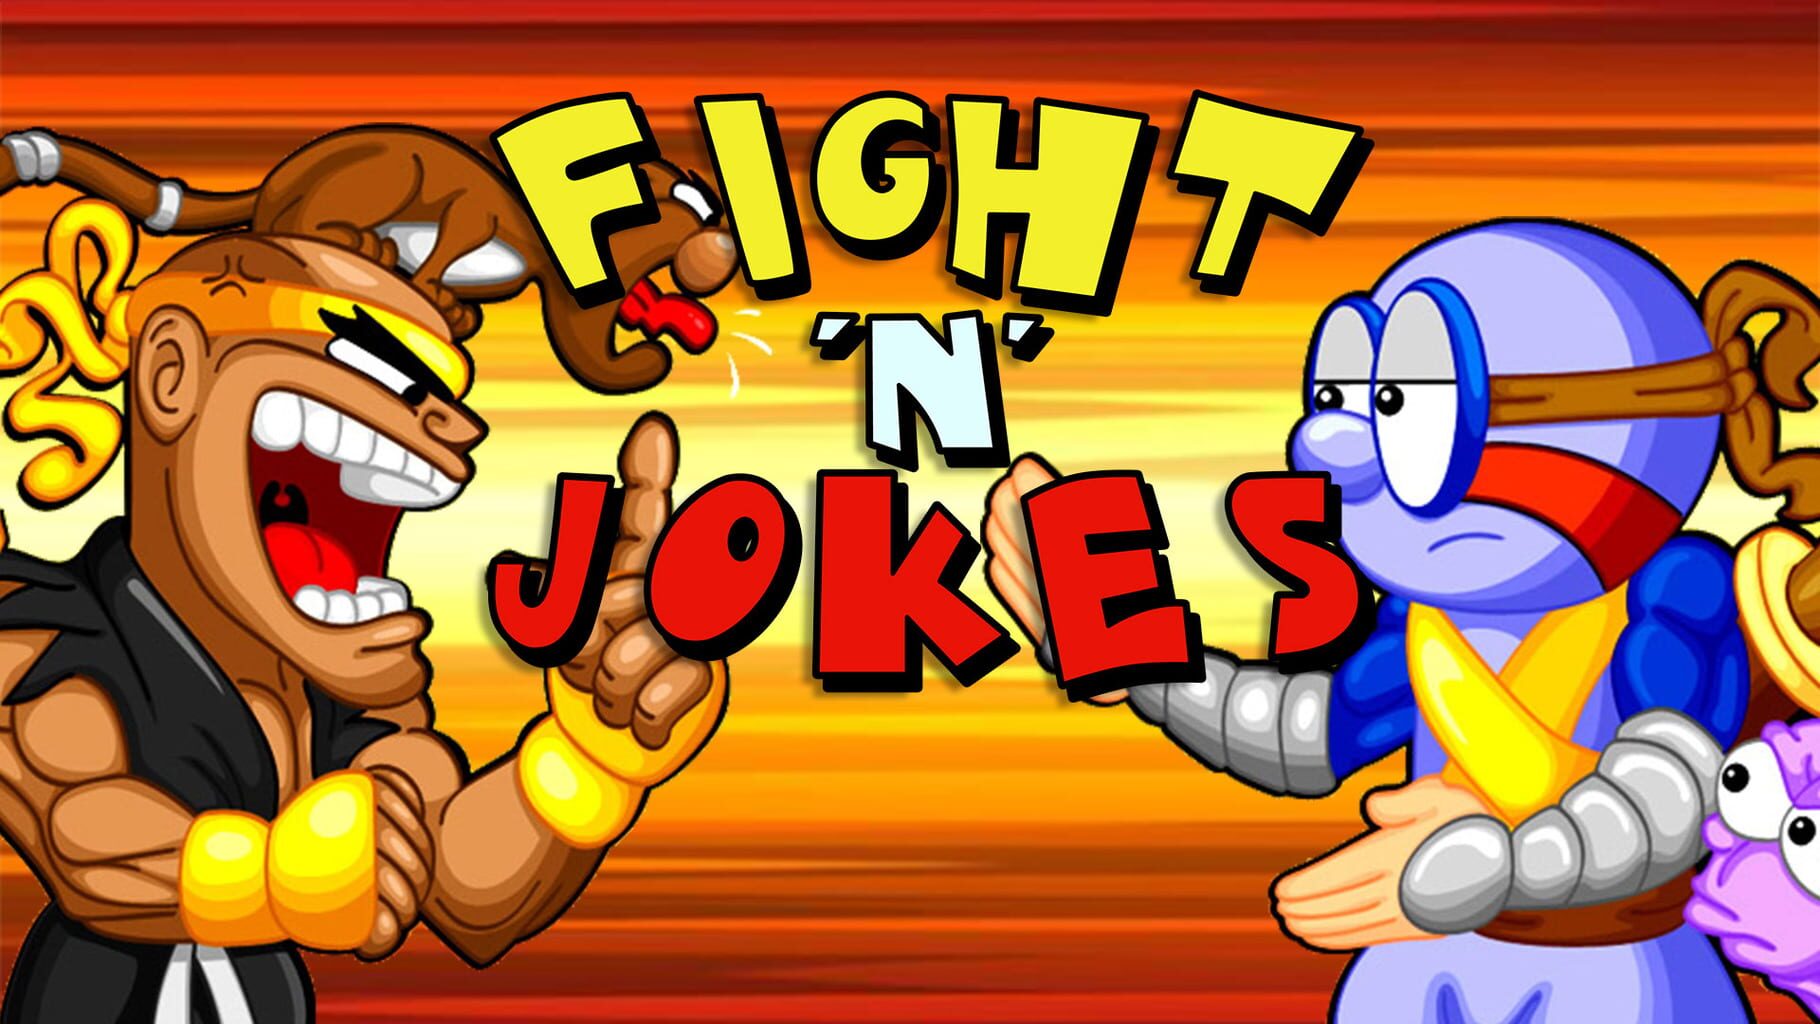 FightNJokes artwork